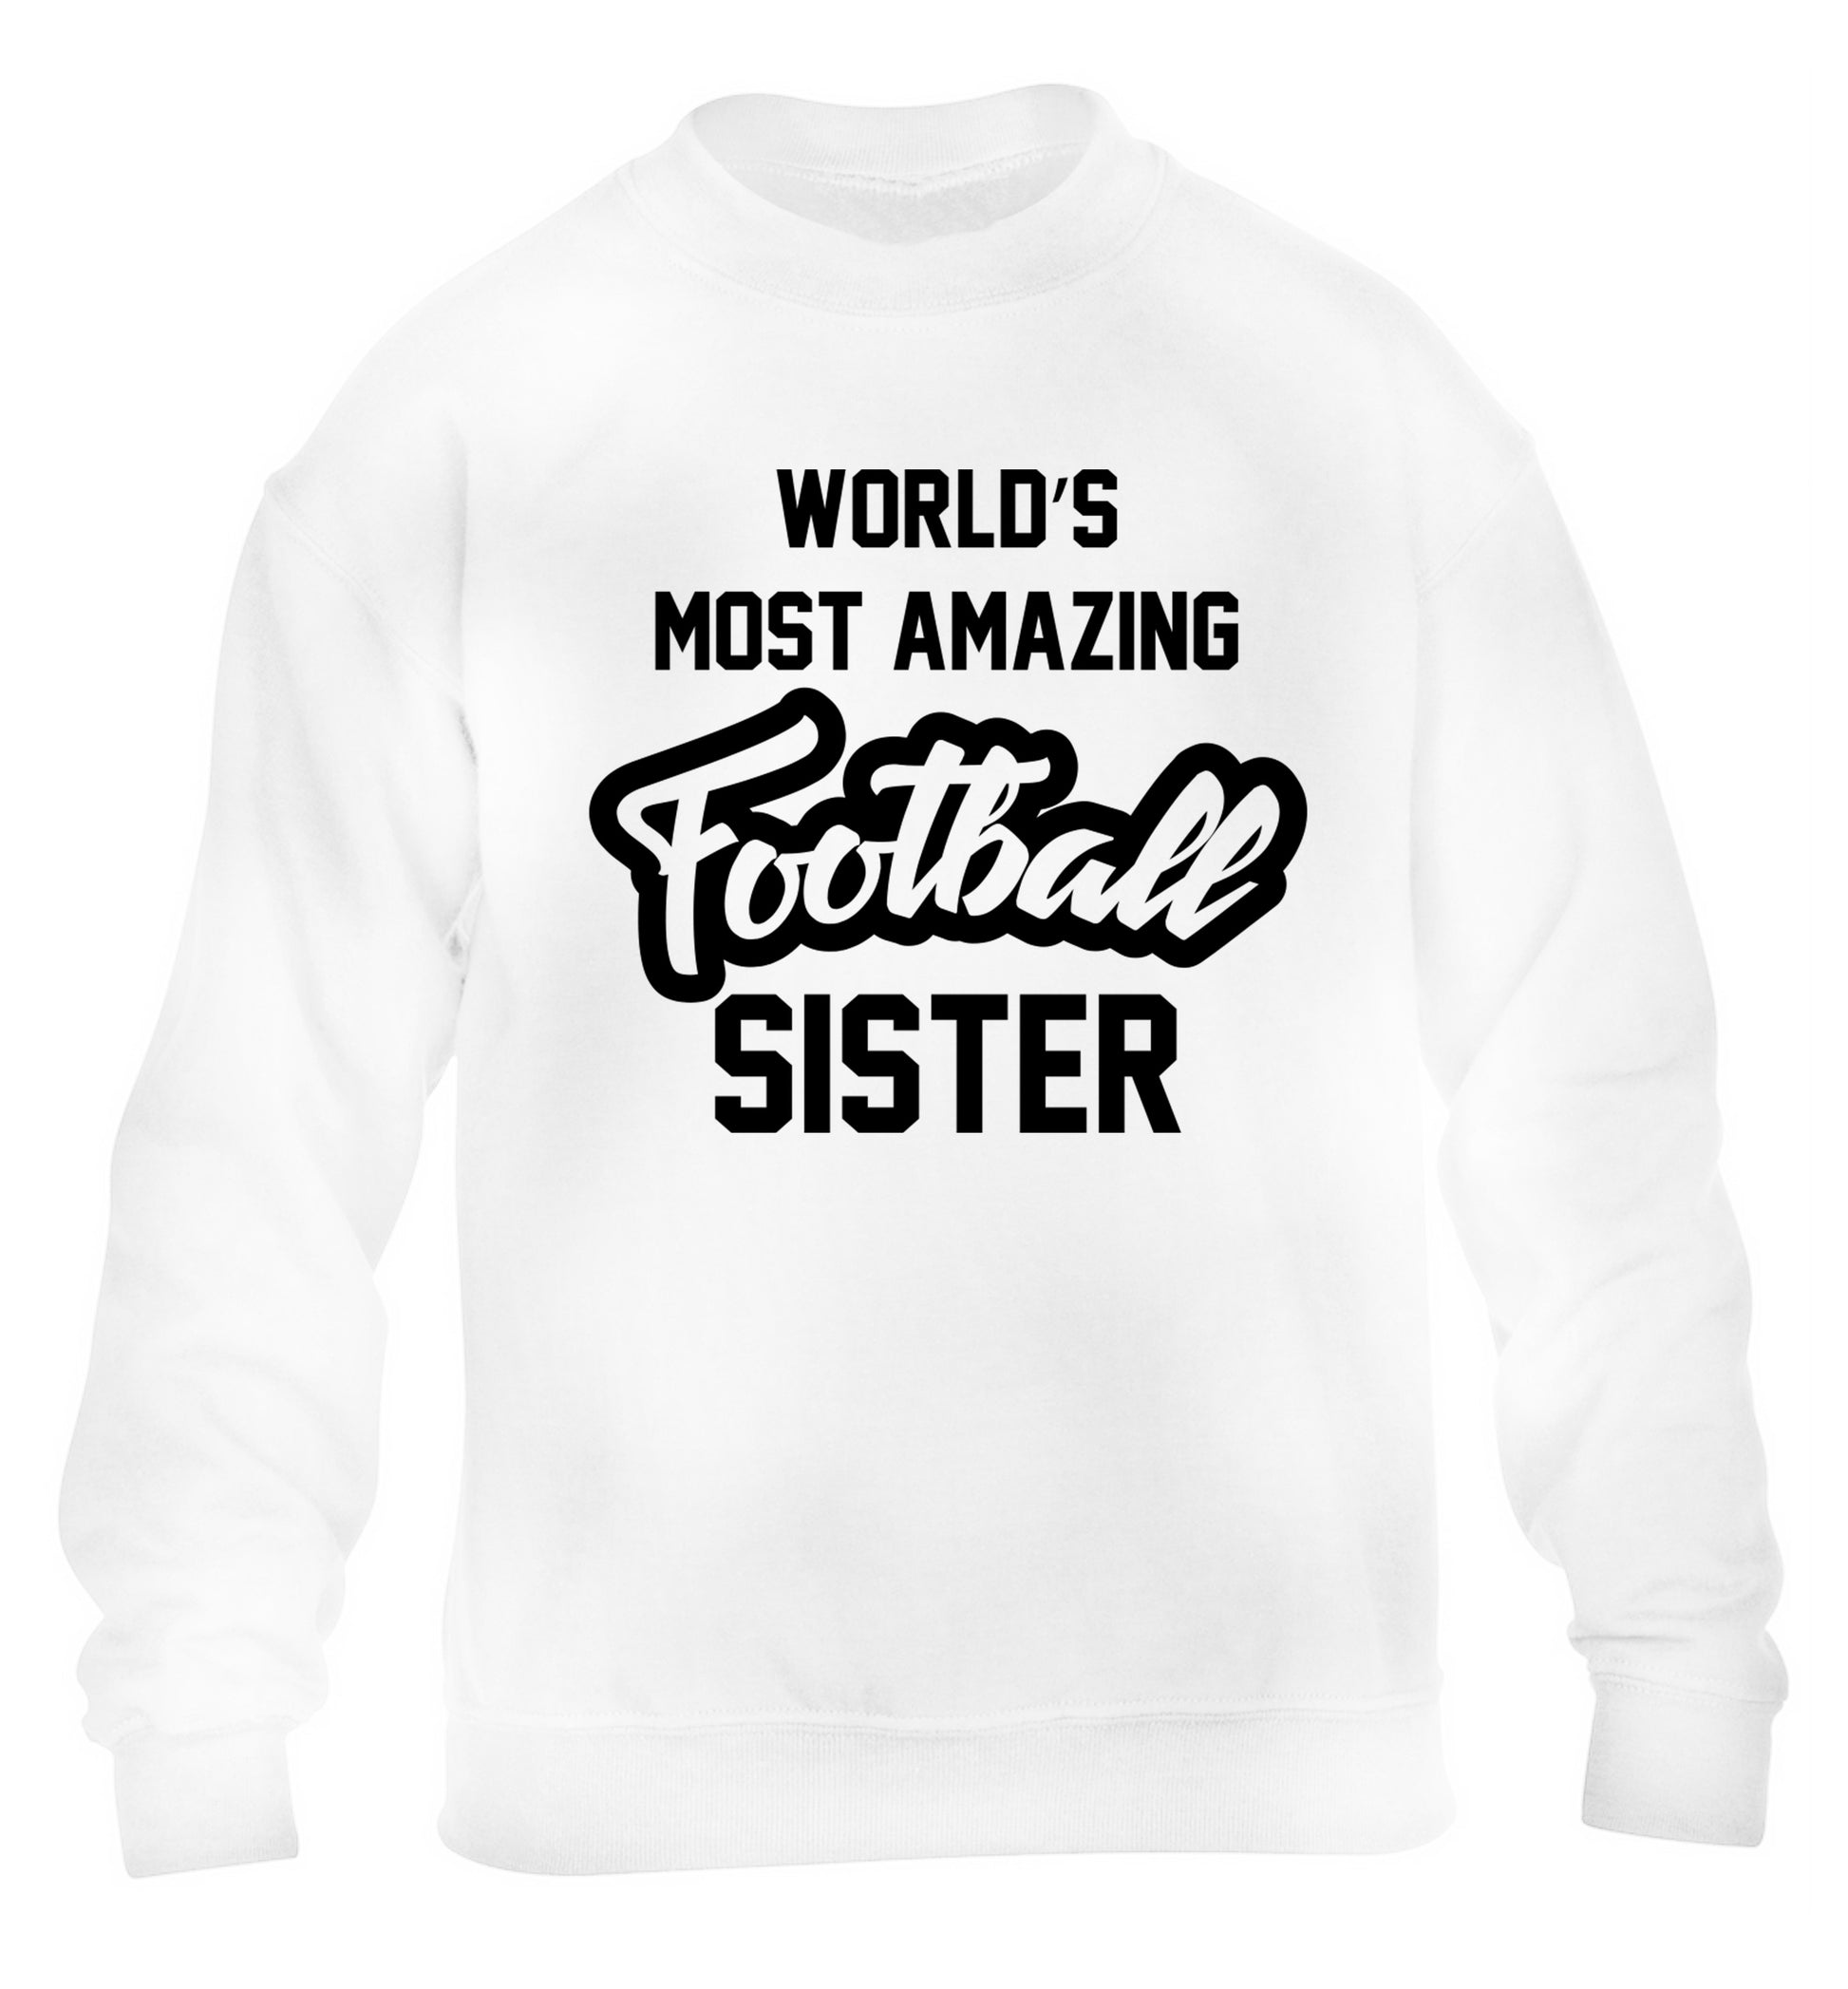 Worlds most amazing football sister children's white sweater 12-14 Years